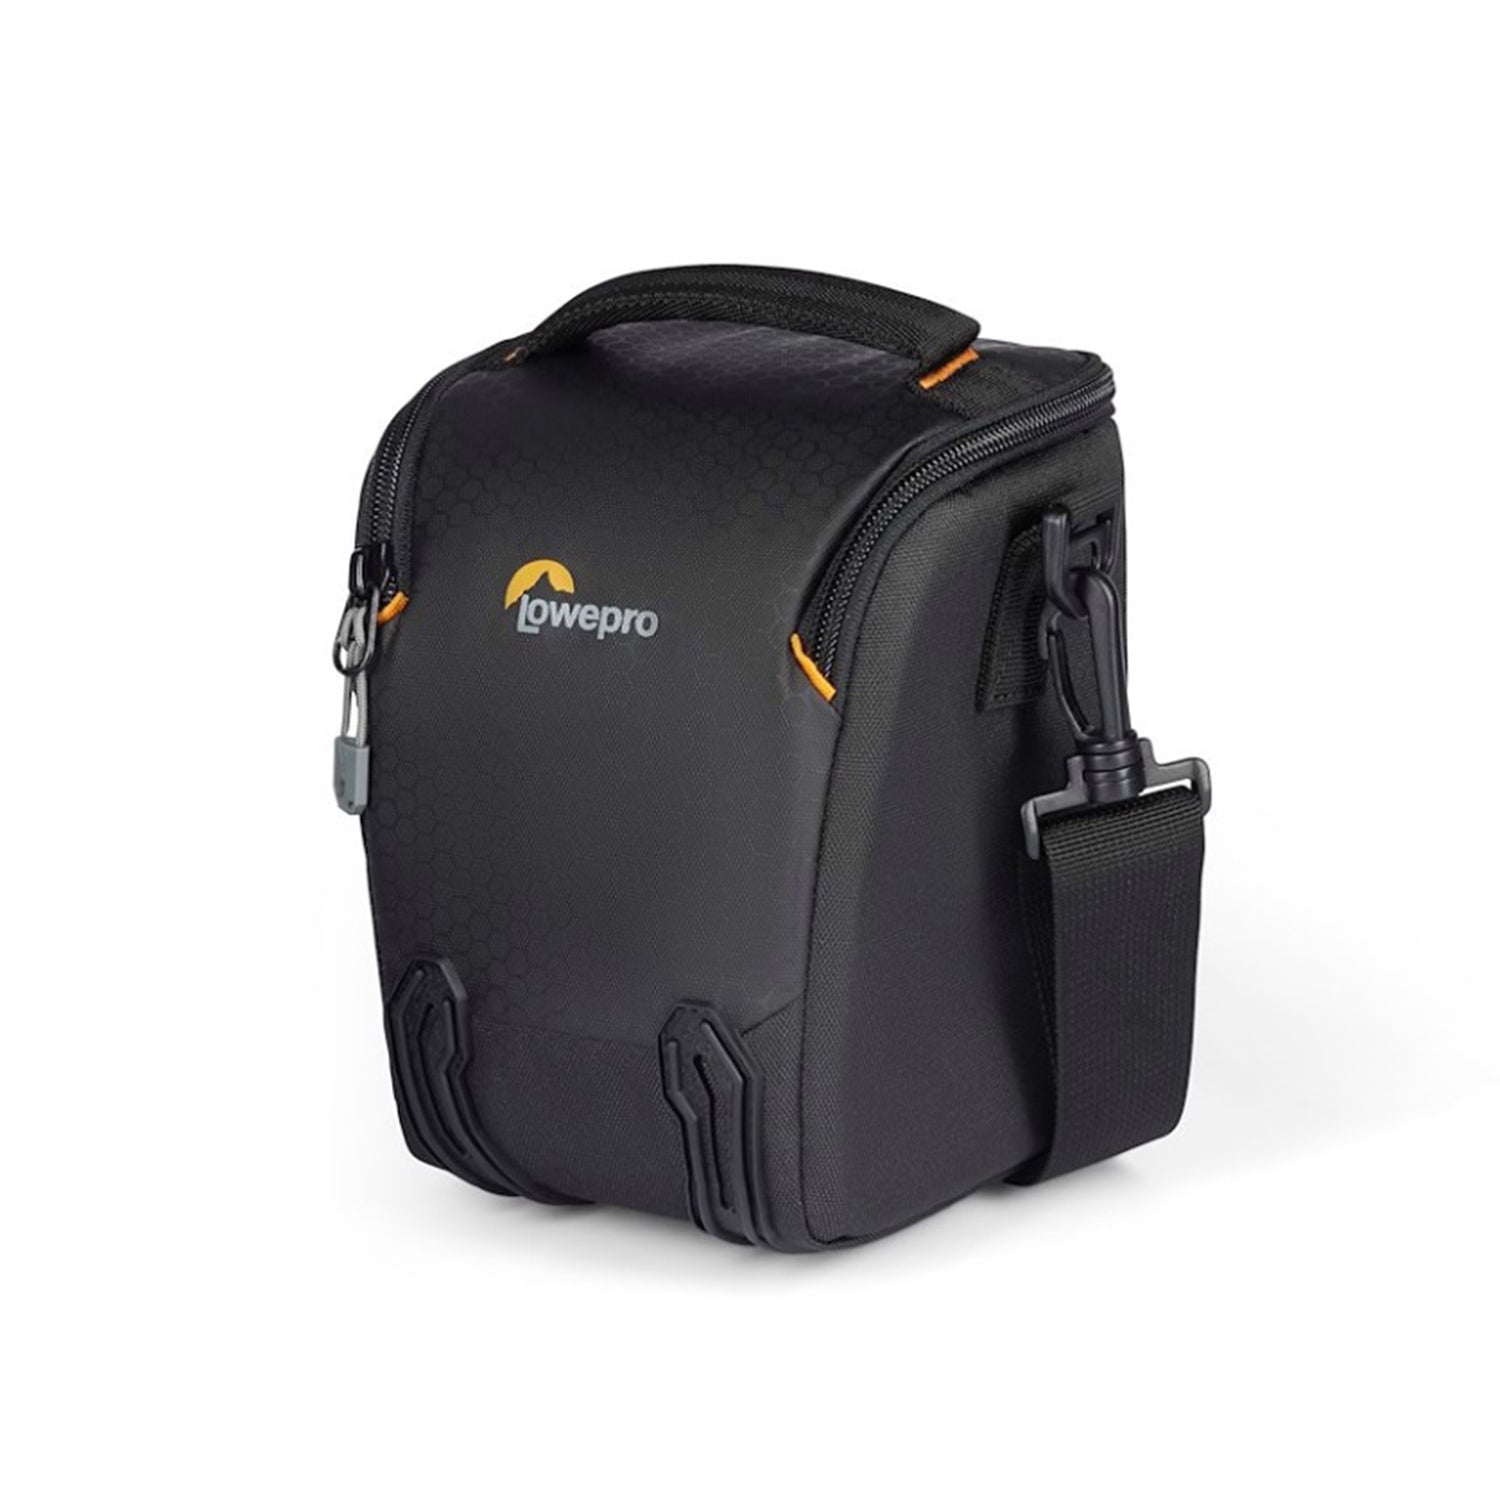 Lowepro Adventura TLZ 30 III Shoulder Camera Bag